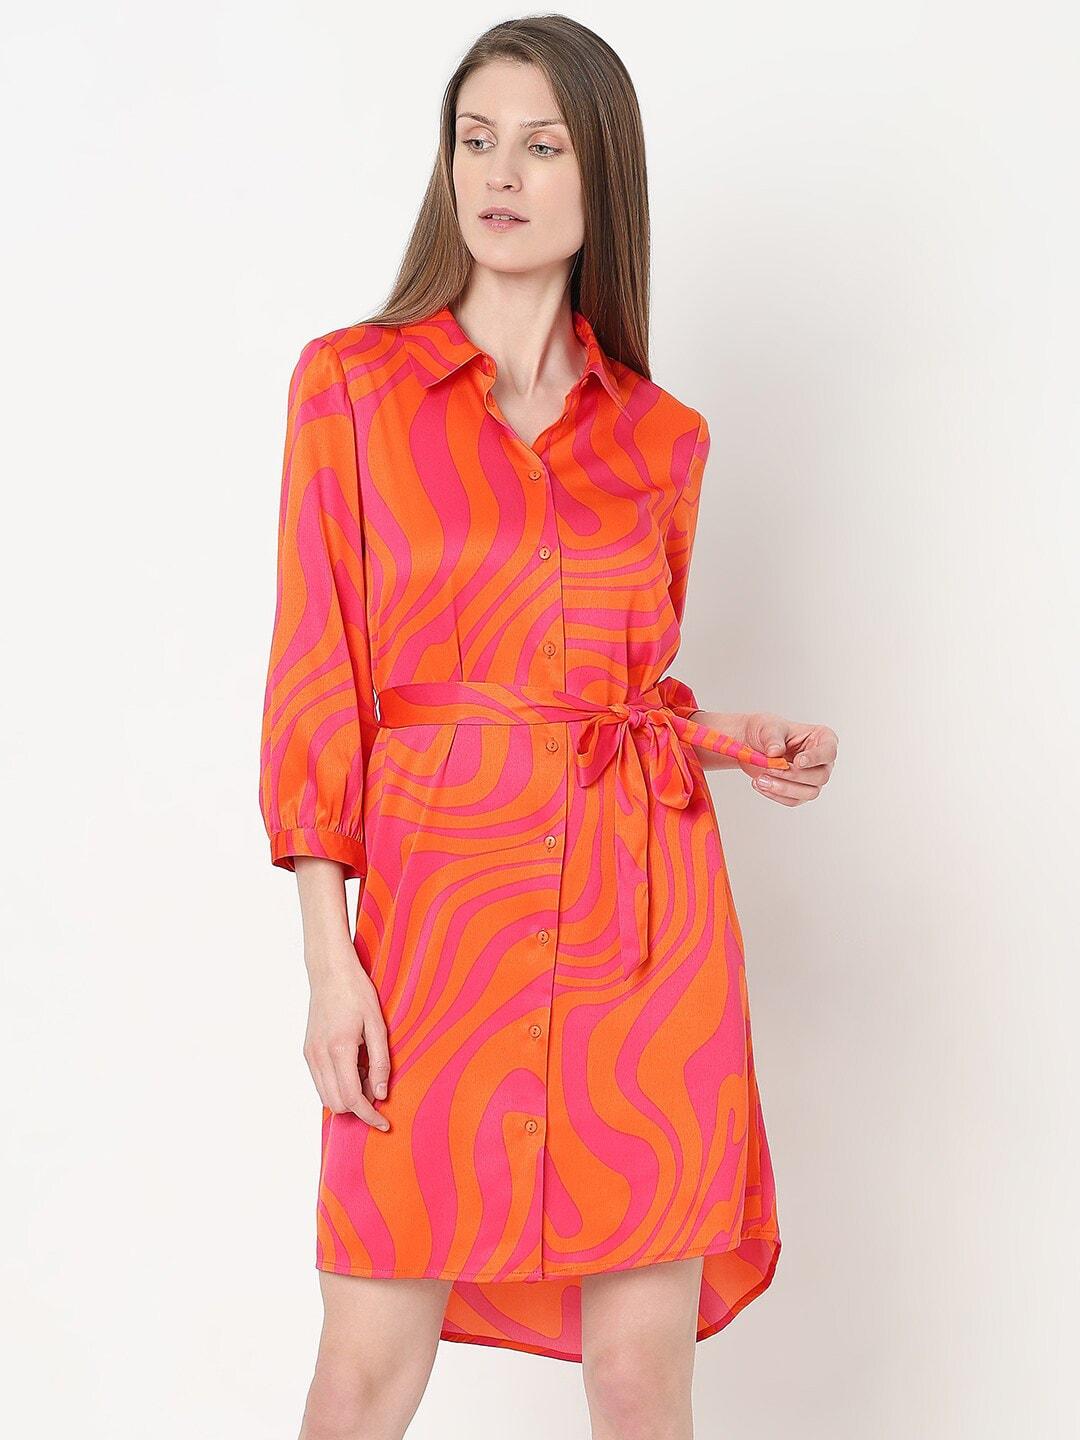 vero moda abstract print bishop sleeves sheath dress